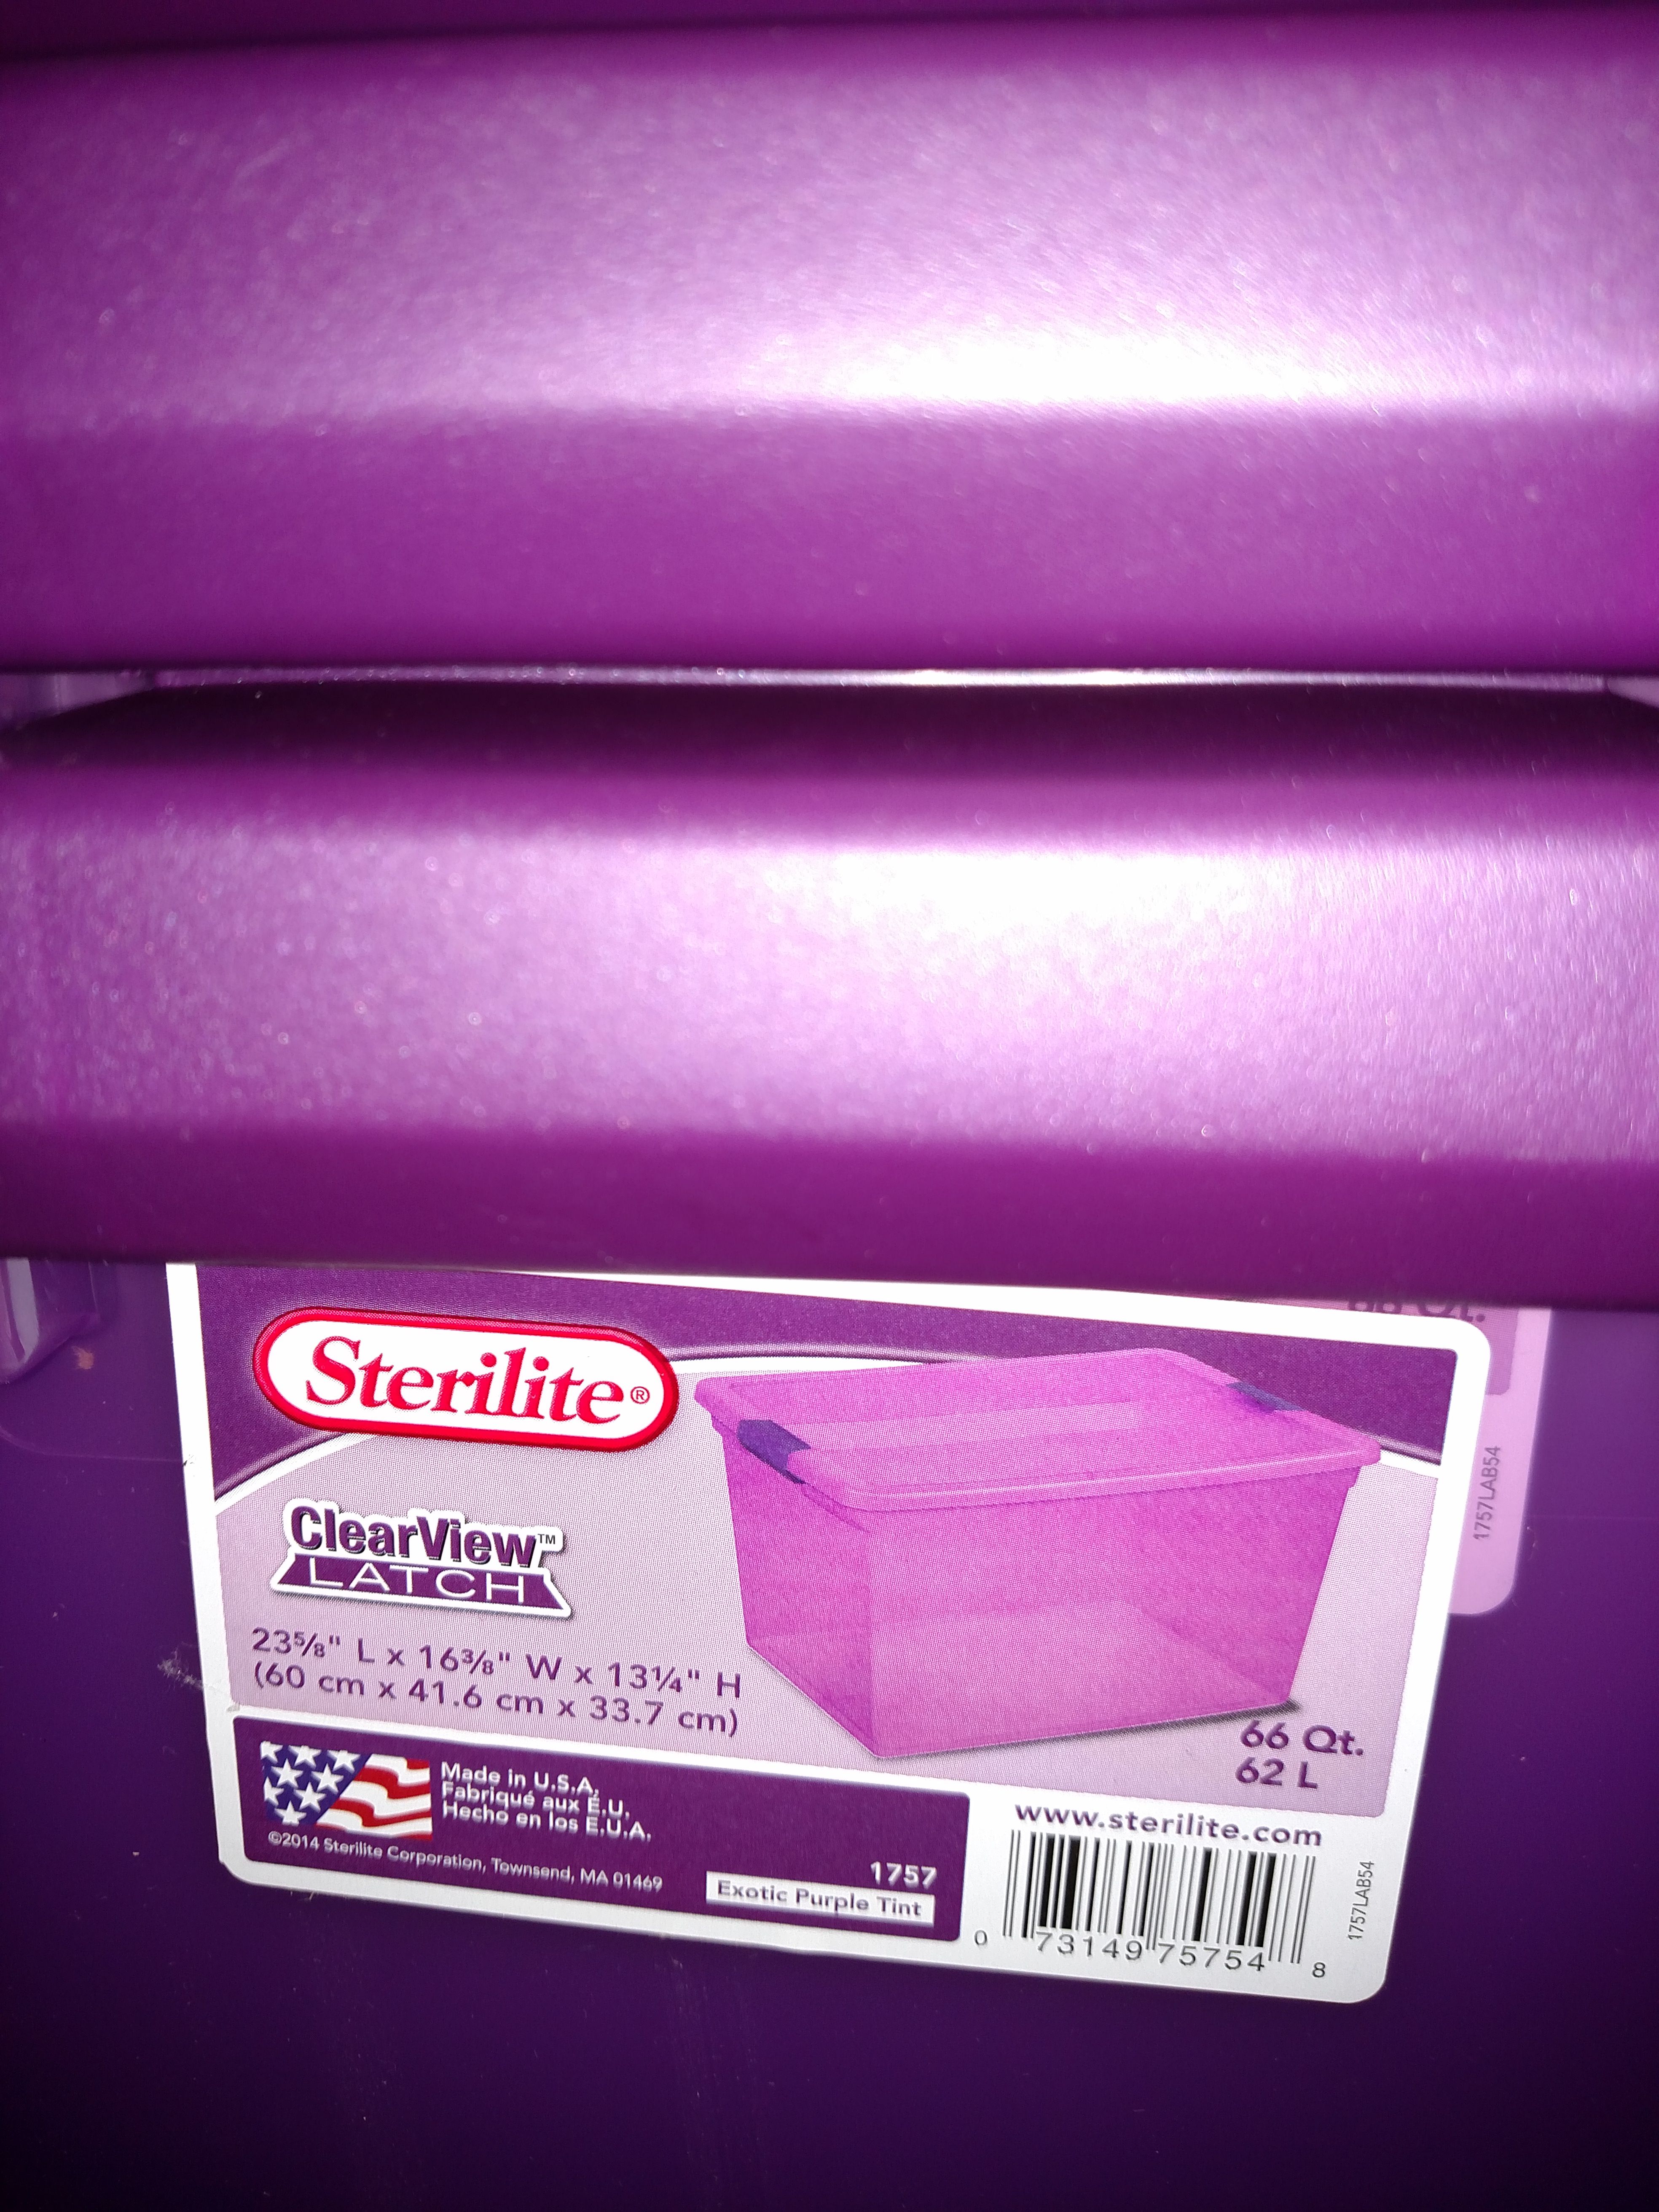 Sterilite 66 Qt./62 L Clearview Latch Box Clears, Purple Handles